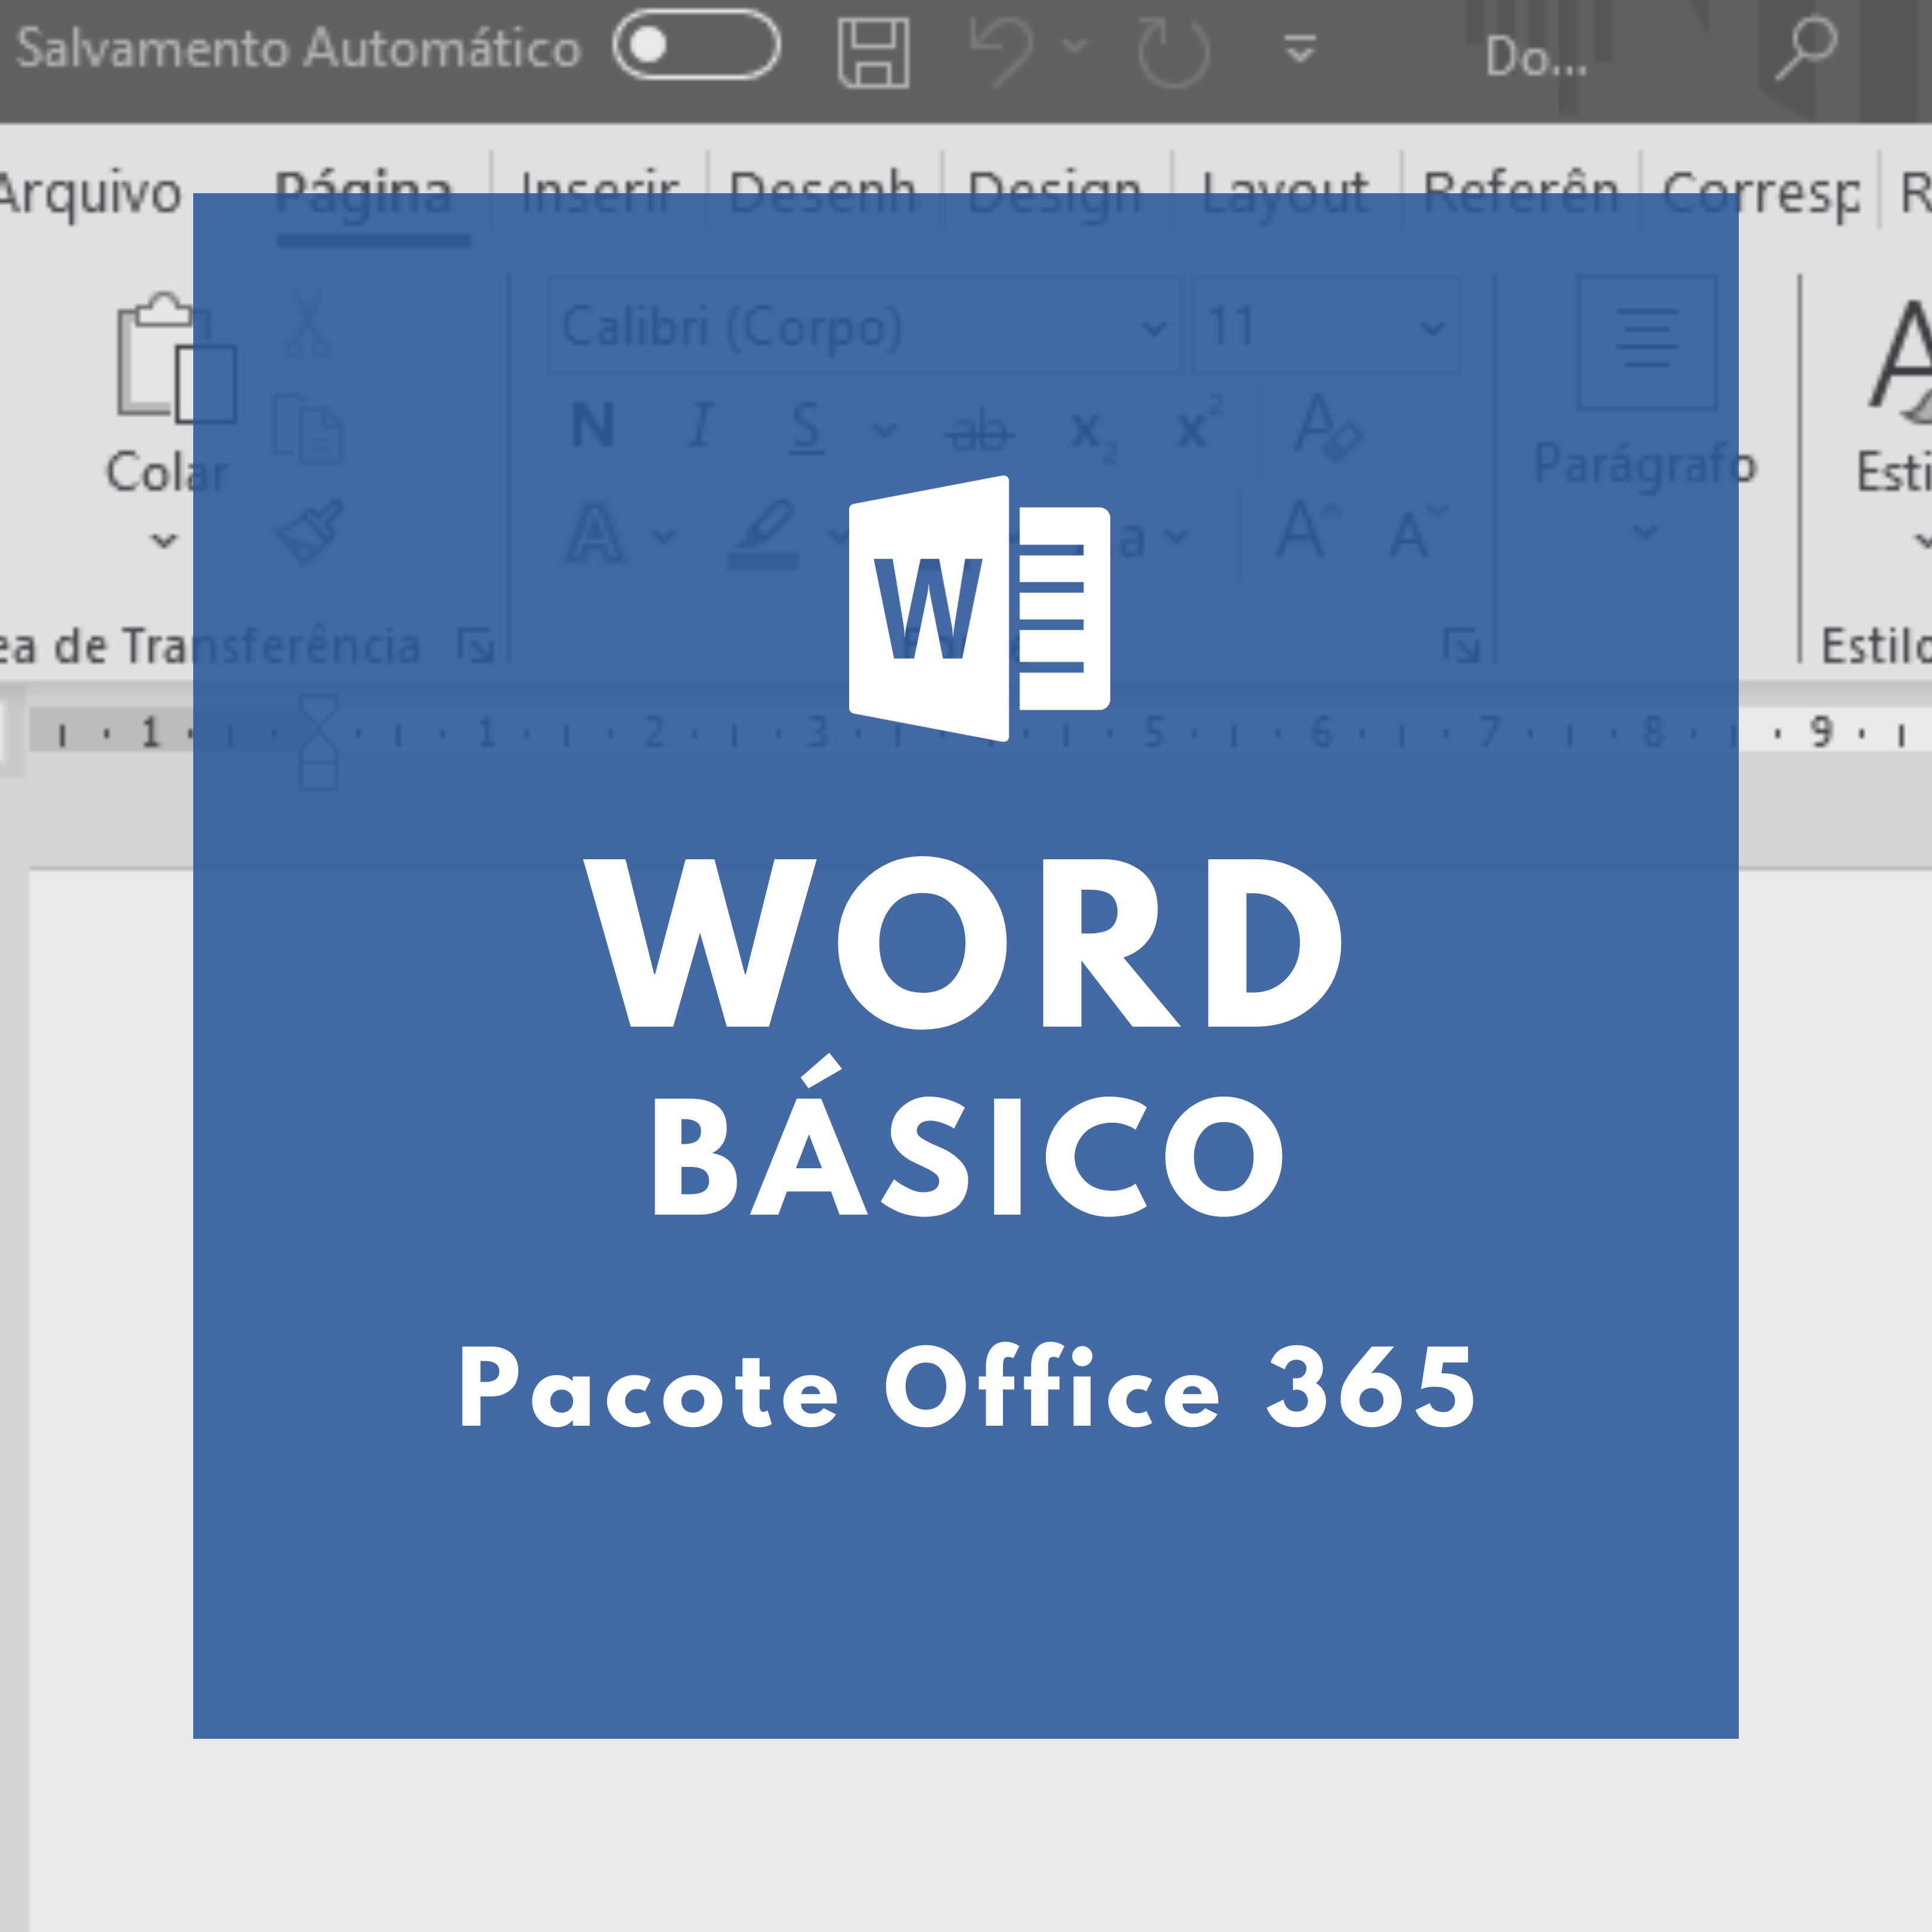  PACOTE OFFICE 365 - WORD BÁSICO